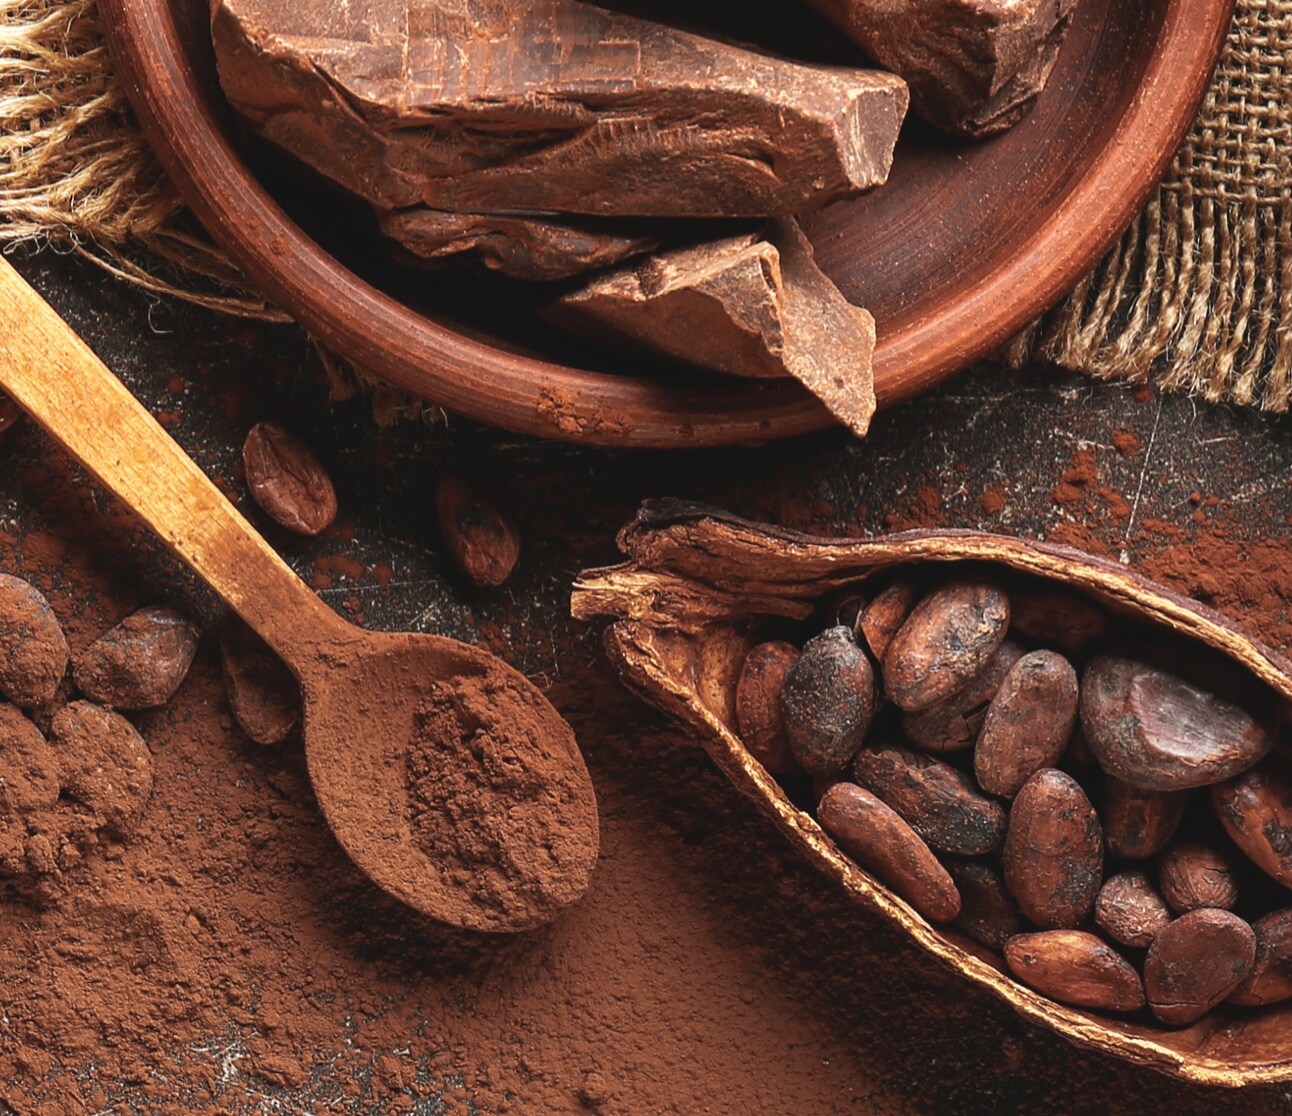 Chocolate and cocoa